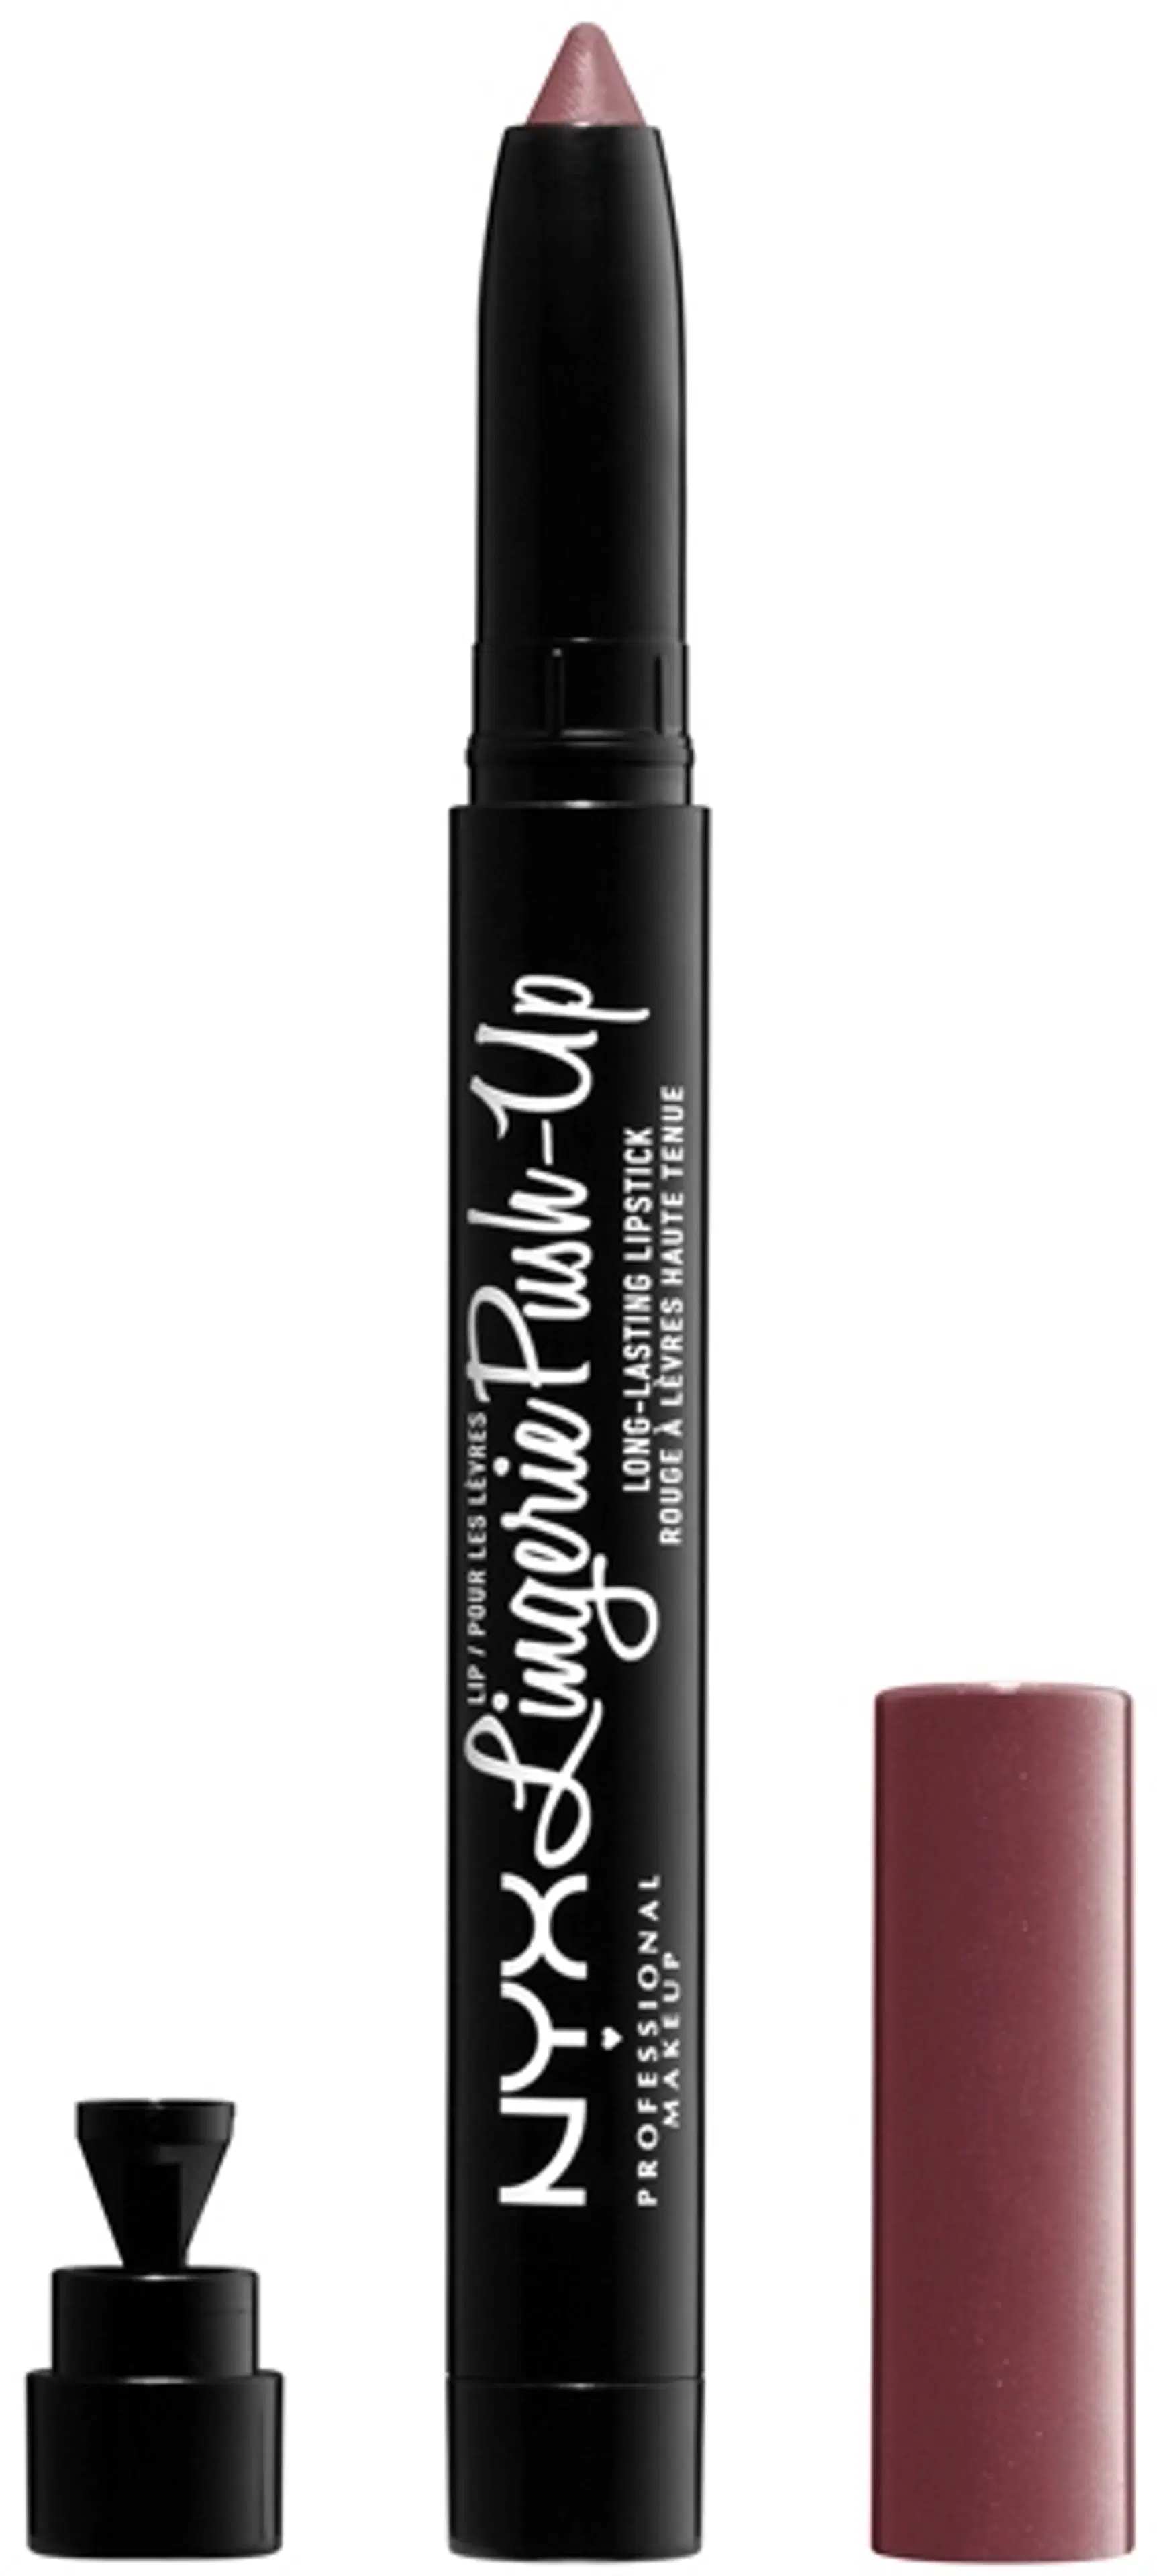 NYX Professional Makeup Lip Lingerie Push-Up Long-Lasting Lipstick huulipuna 1,5g